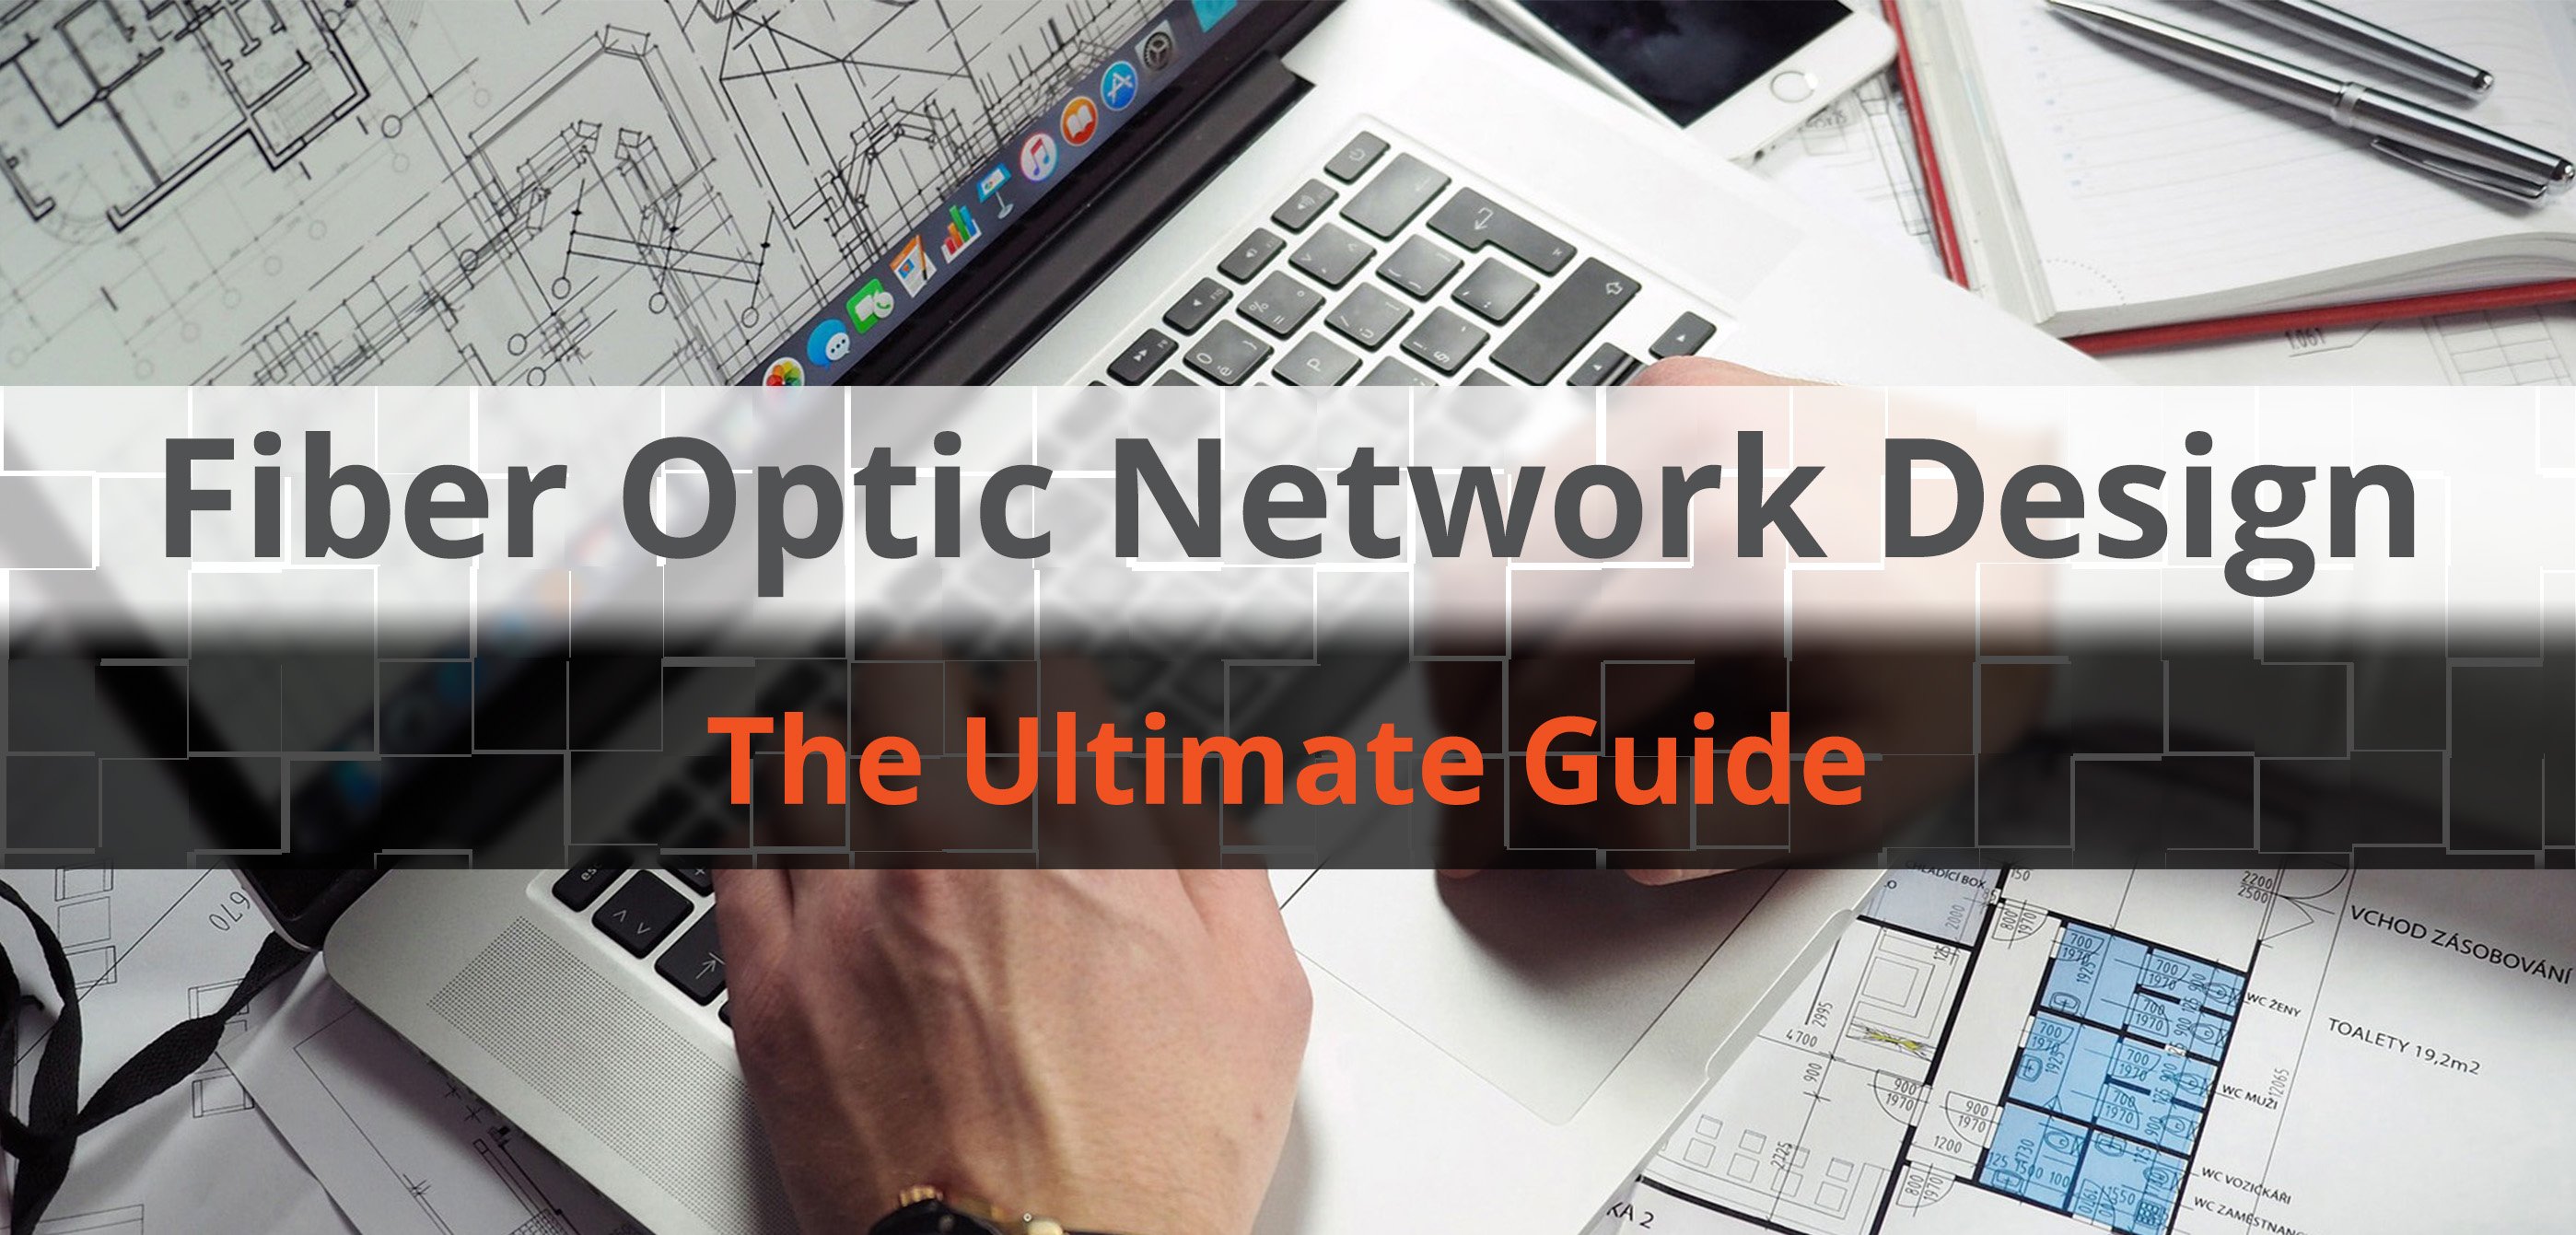 Resource Center - Fiber Optic Network Design - Landing Page (featured image)